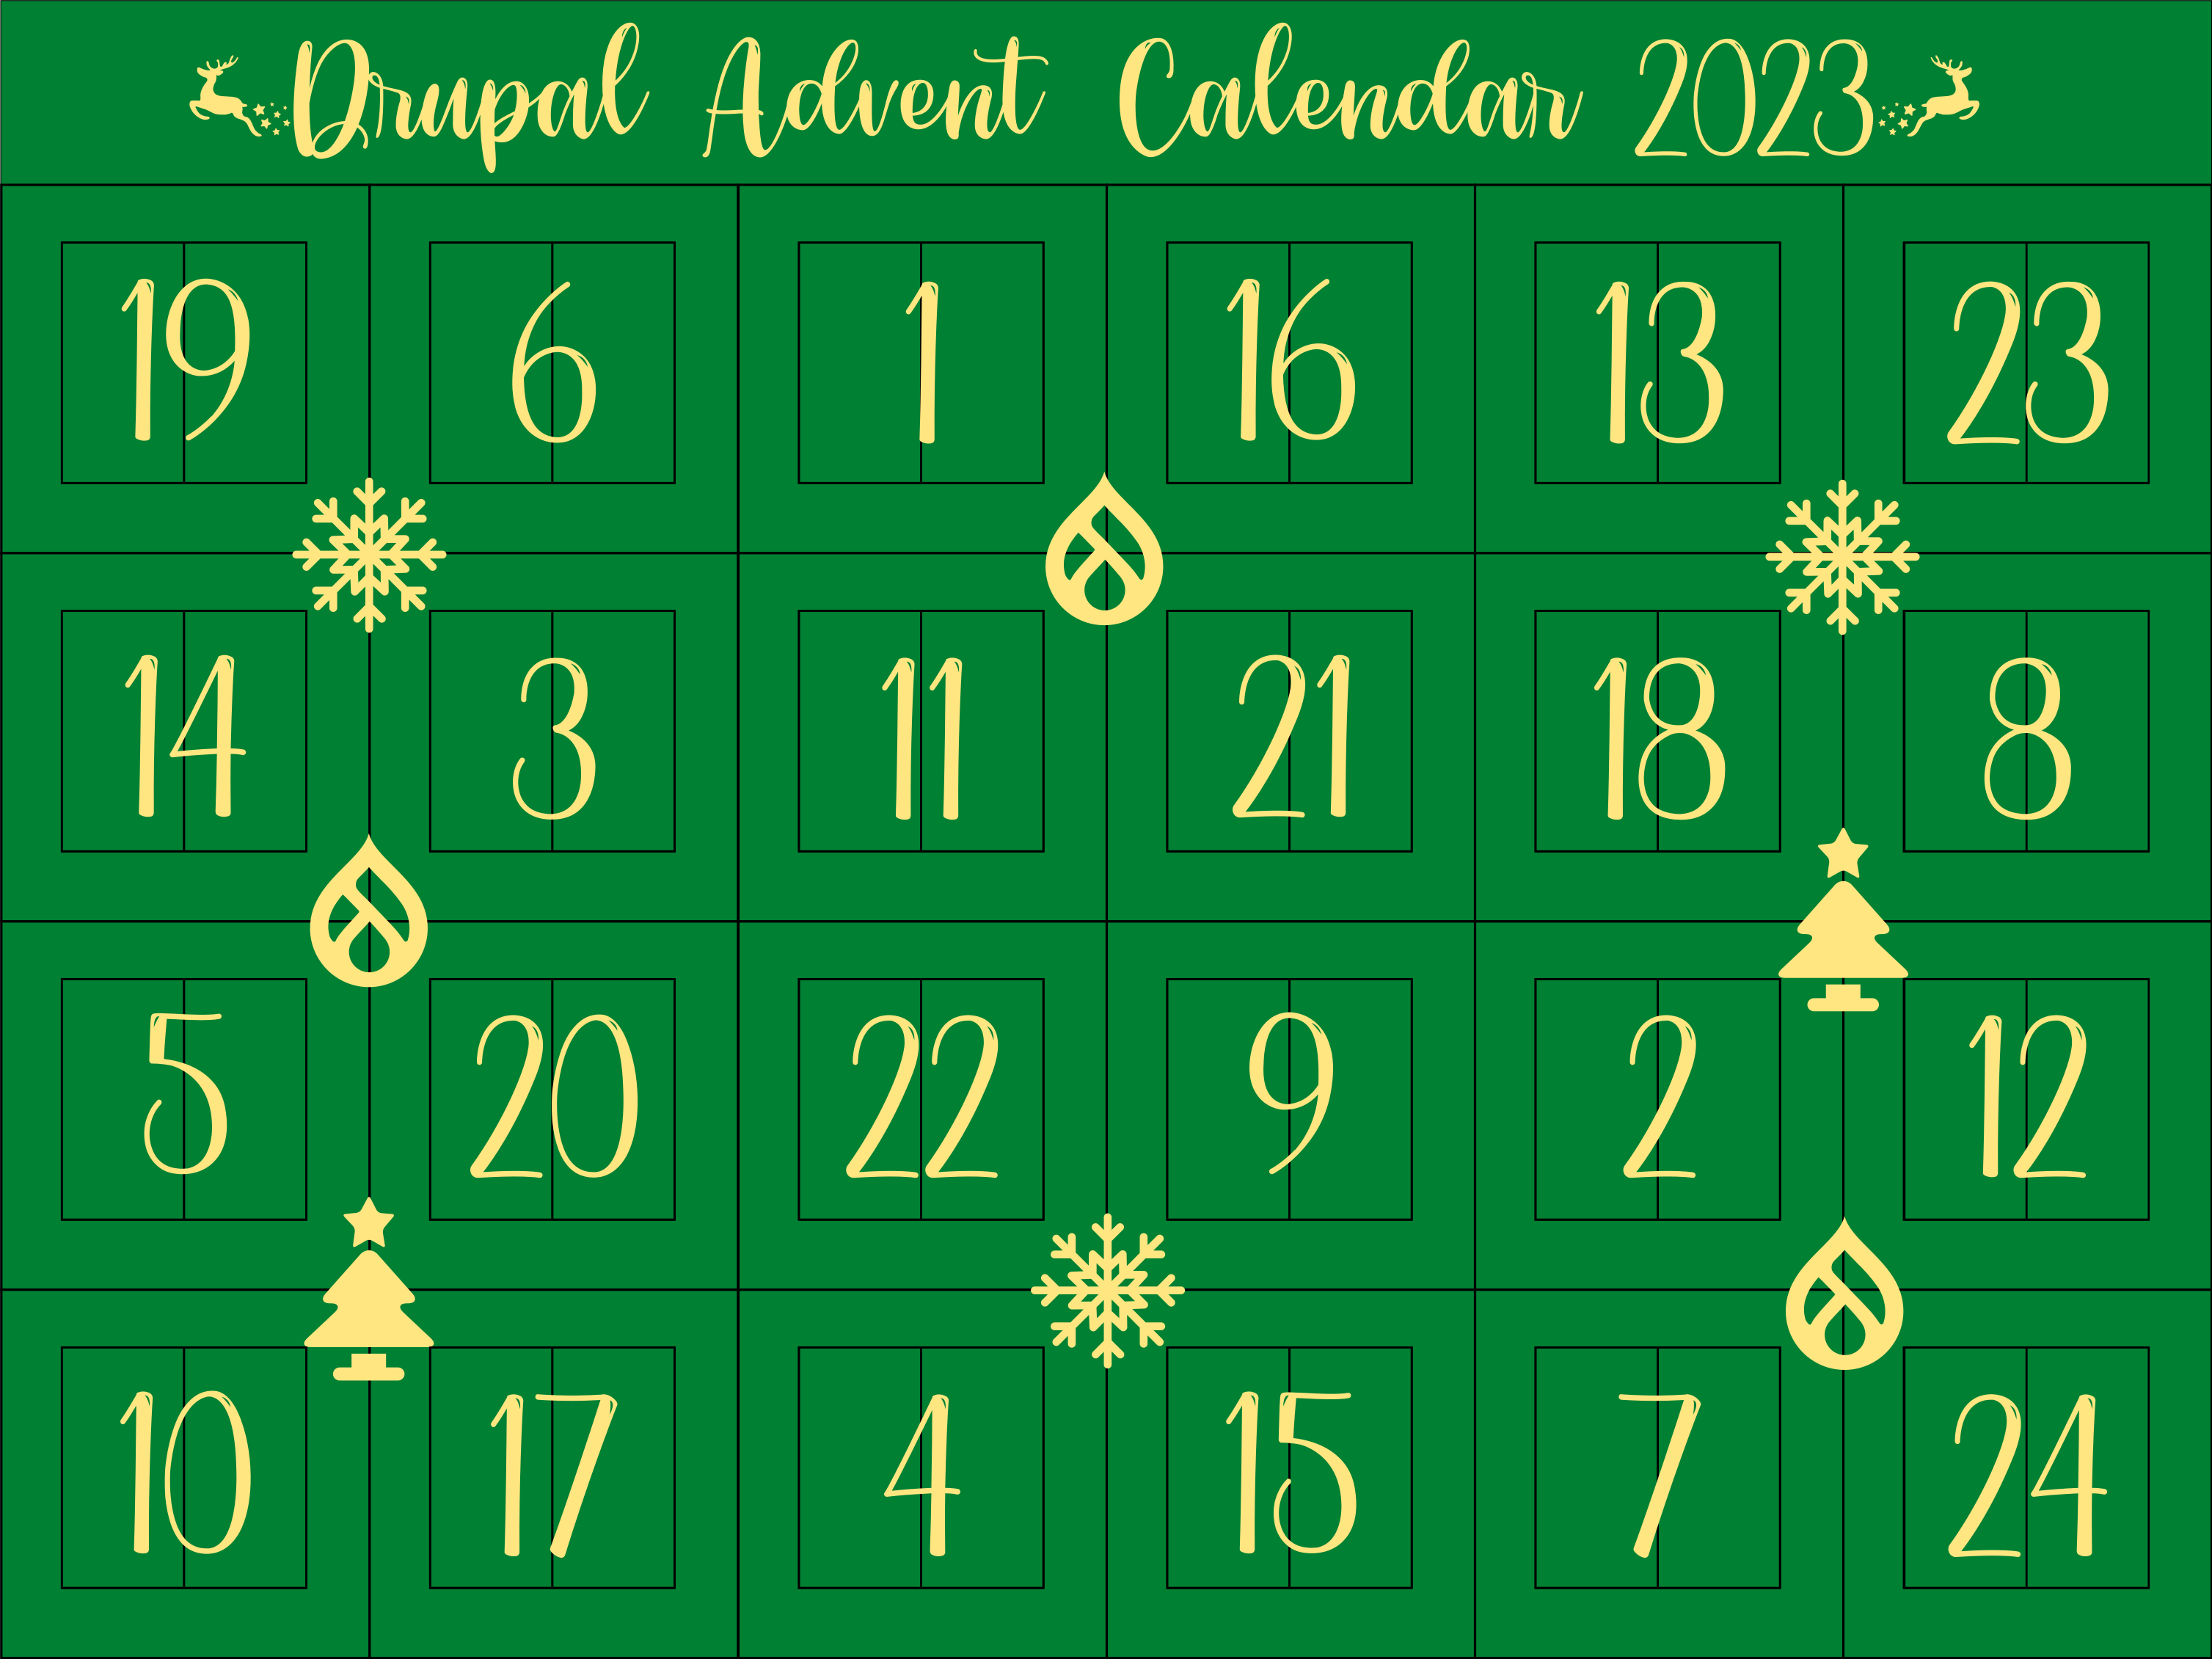 LostCarPark Drupal Blog: Drupal Advent Calendar 2023 Retrospective and Thank Yous